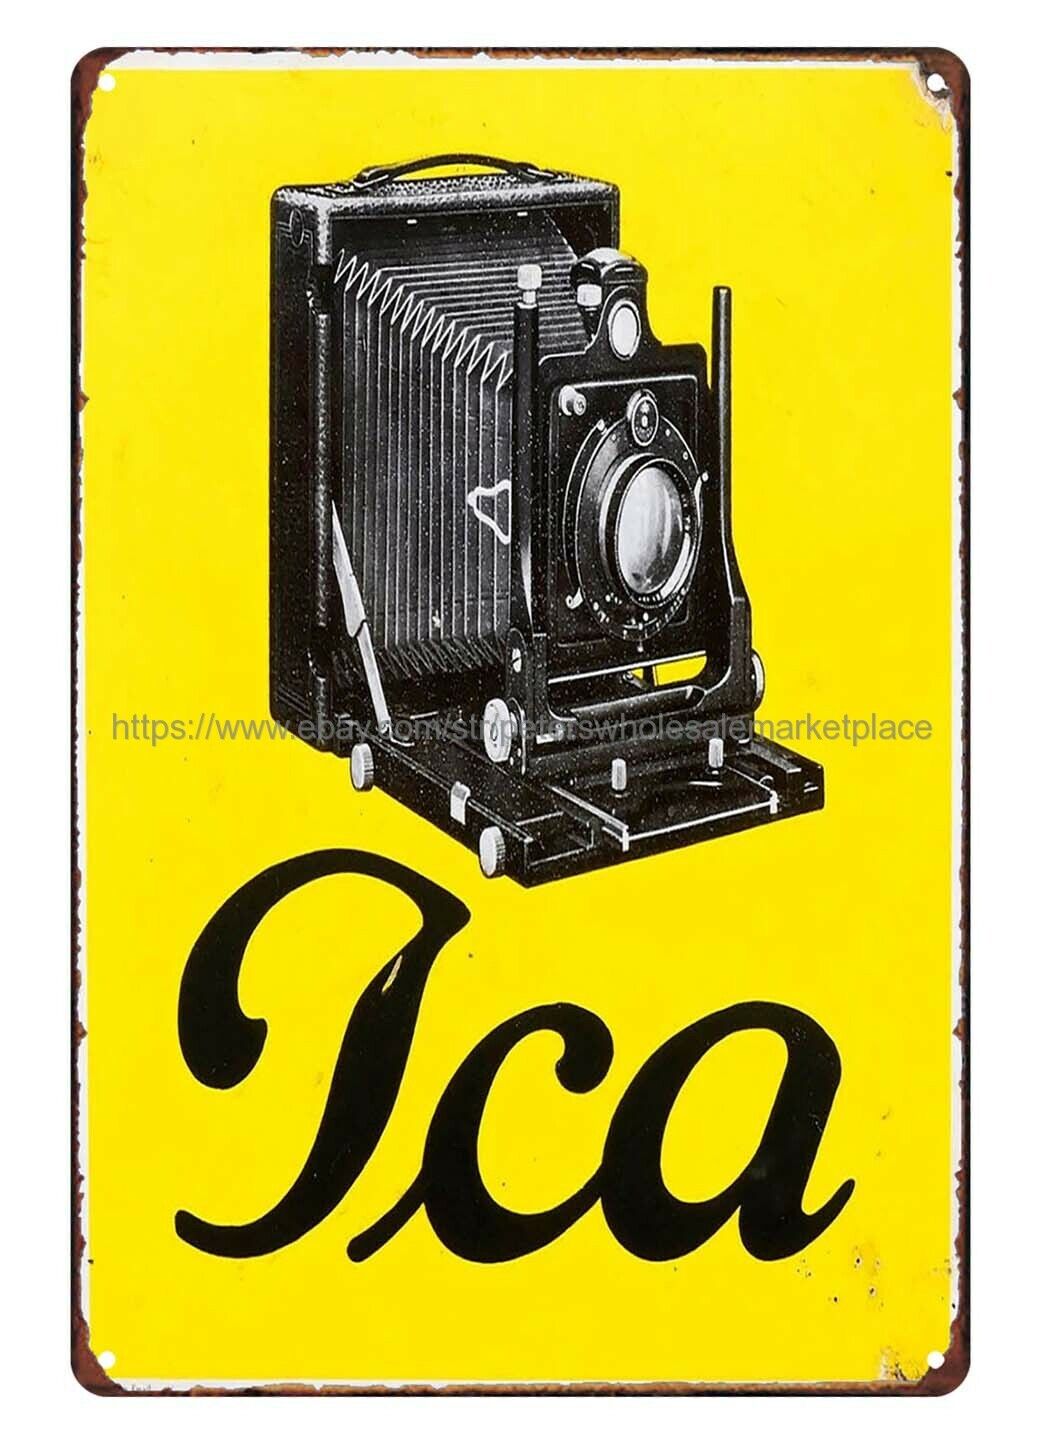 Decorative Collectibles wall decor 1920s Ica Cameras metal tin sign